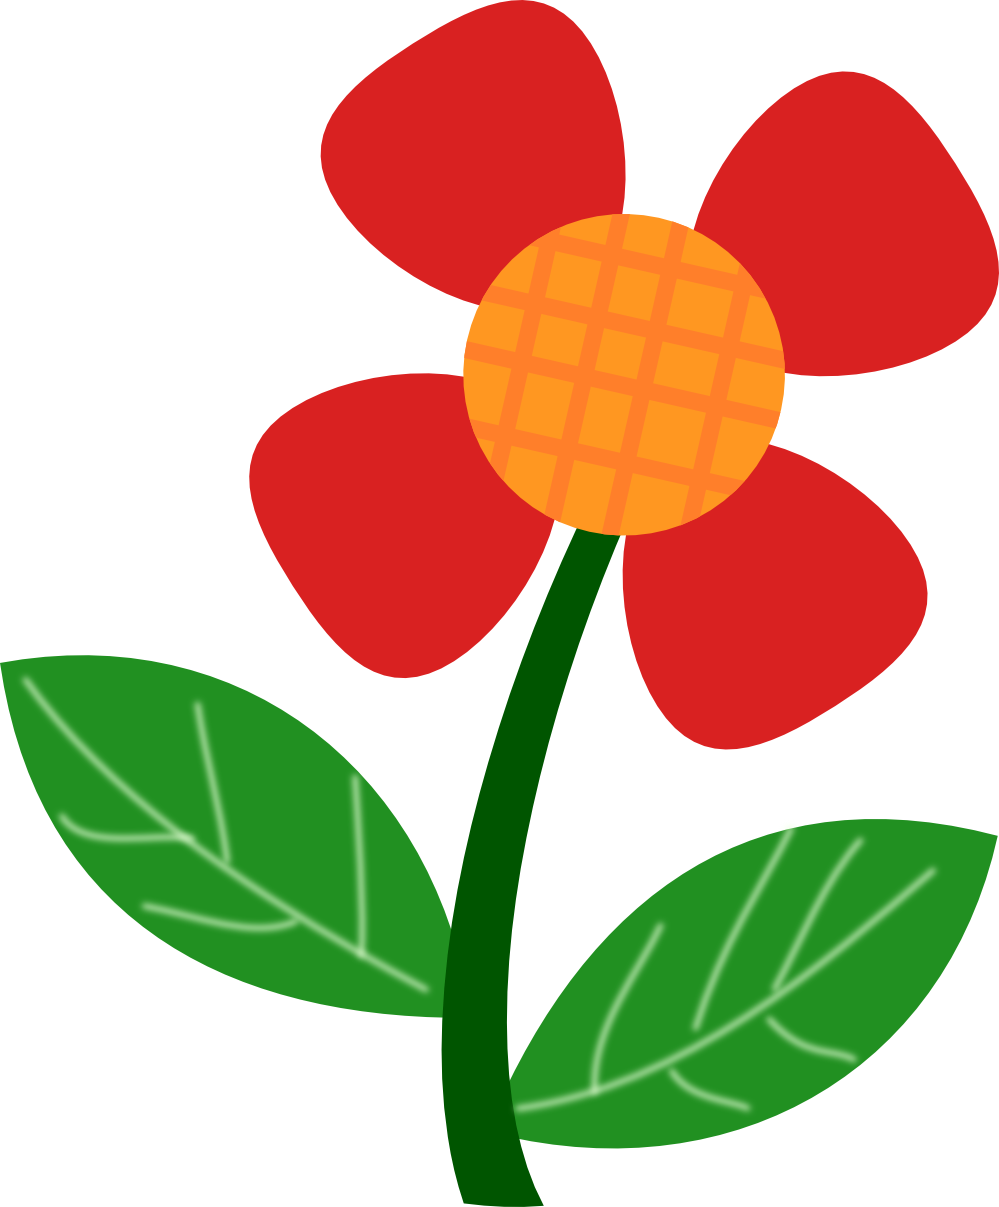 Red Flower Clip Art At Clker 